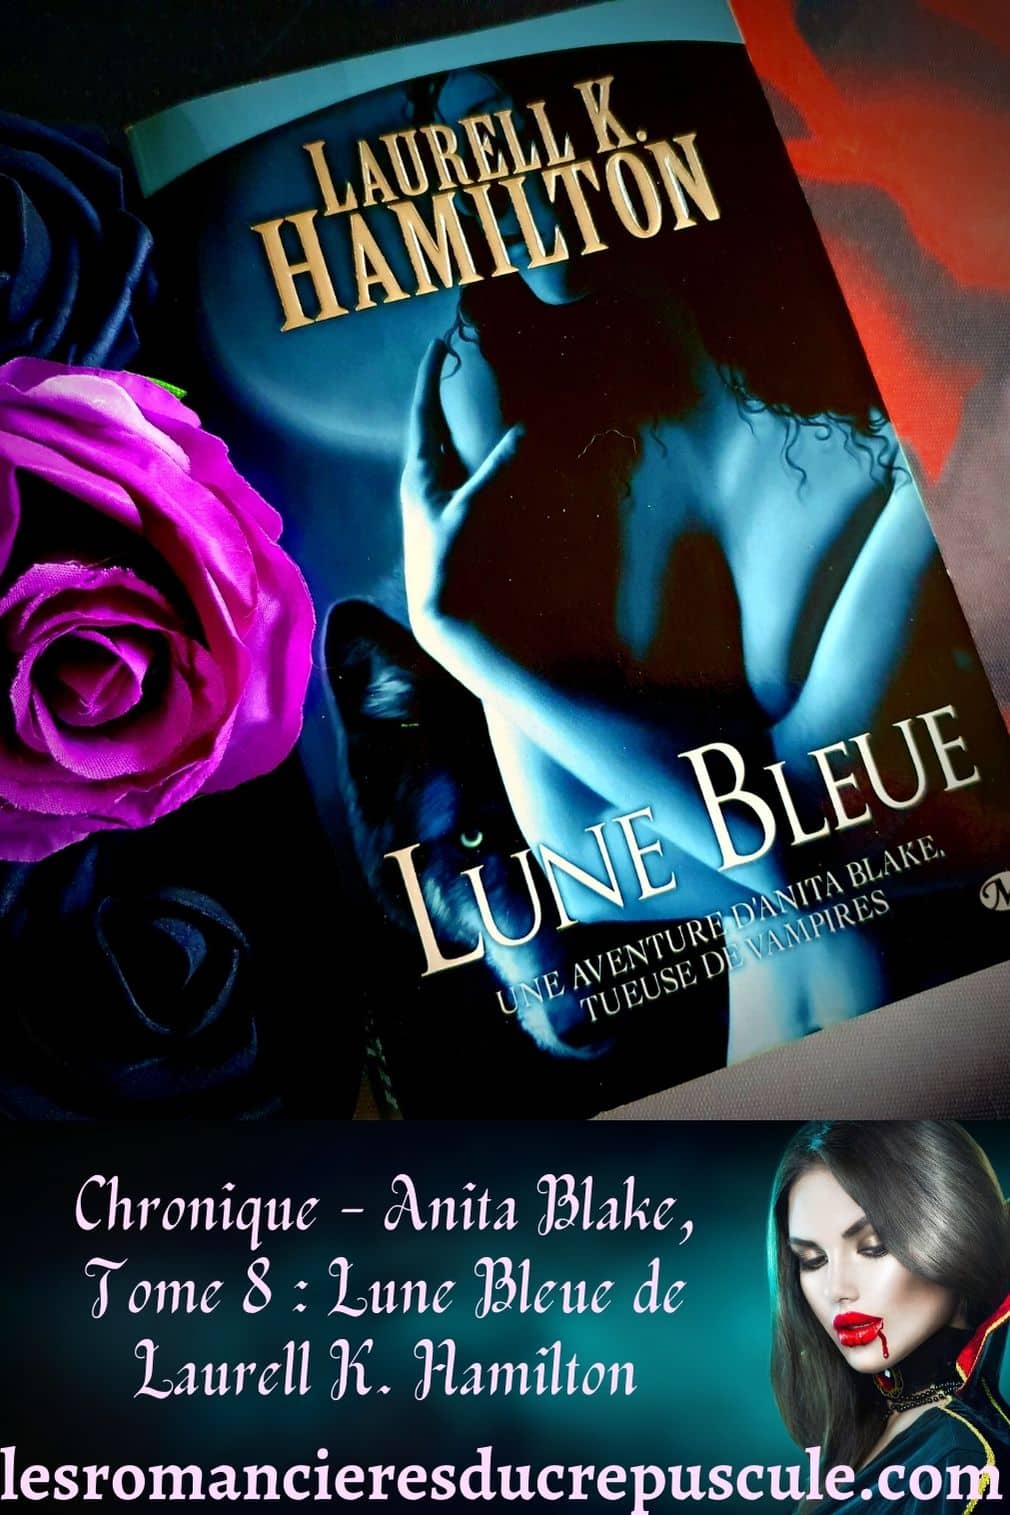 Anita Blake, Tome 8 Lune Bleue de Laurell K. Hamilton - pinterest